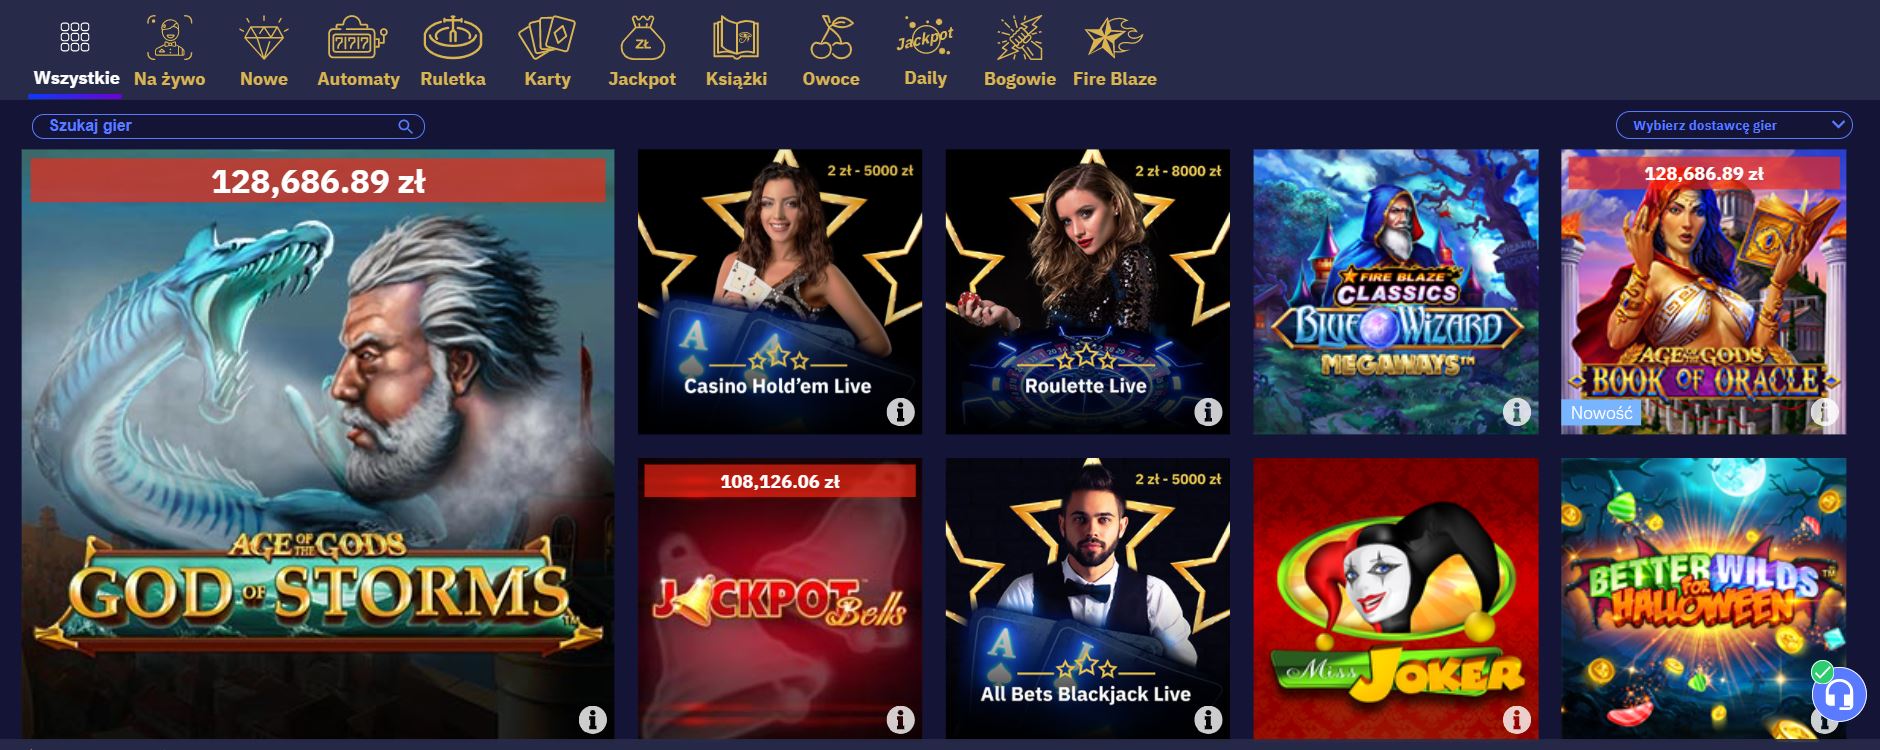 total casino gry screenshot